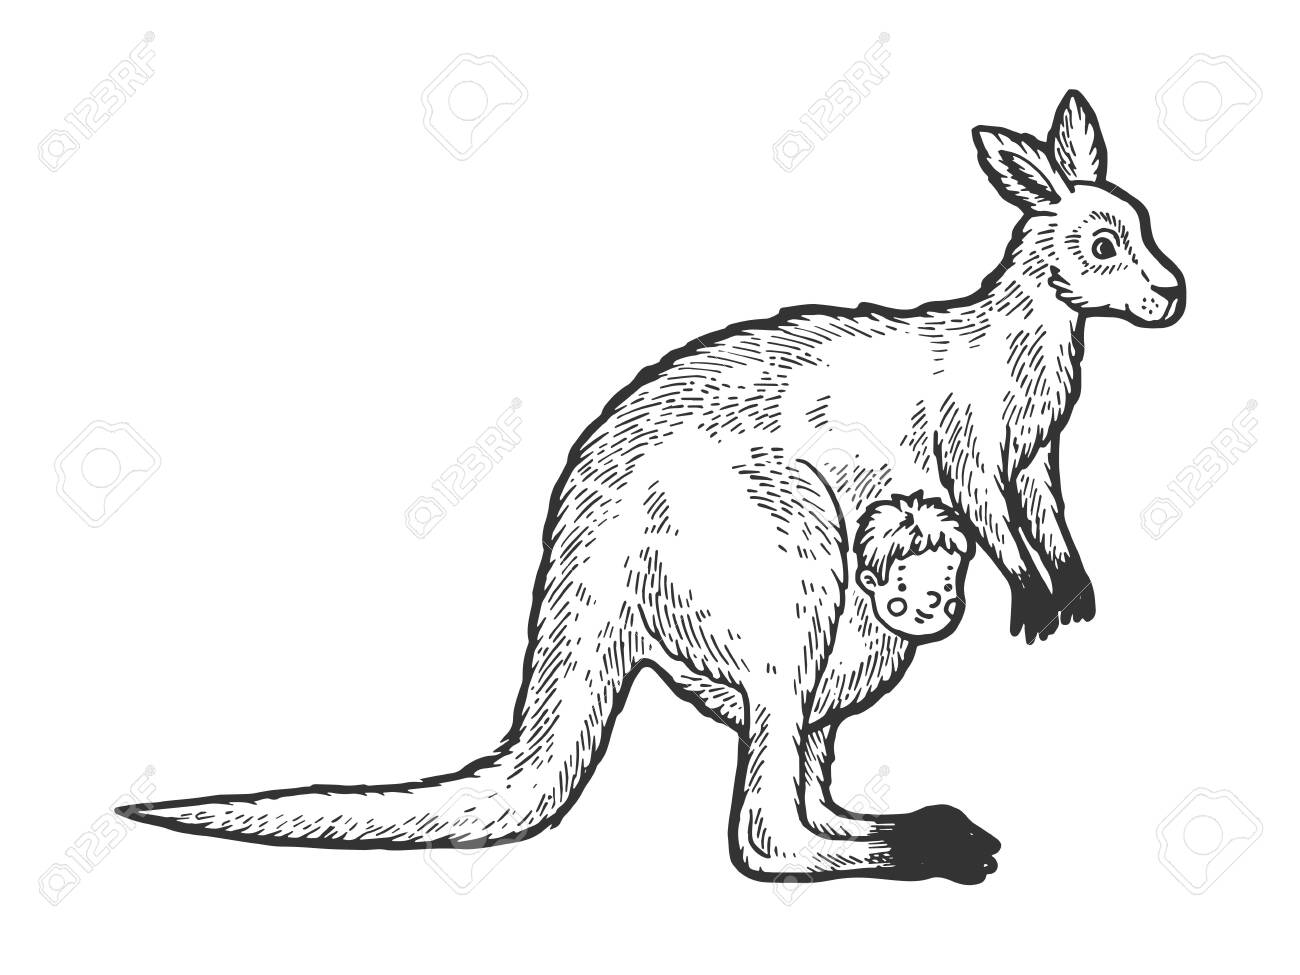 Kangaroo with human baby in kangaroo pouch sketch engraving vector...